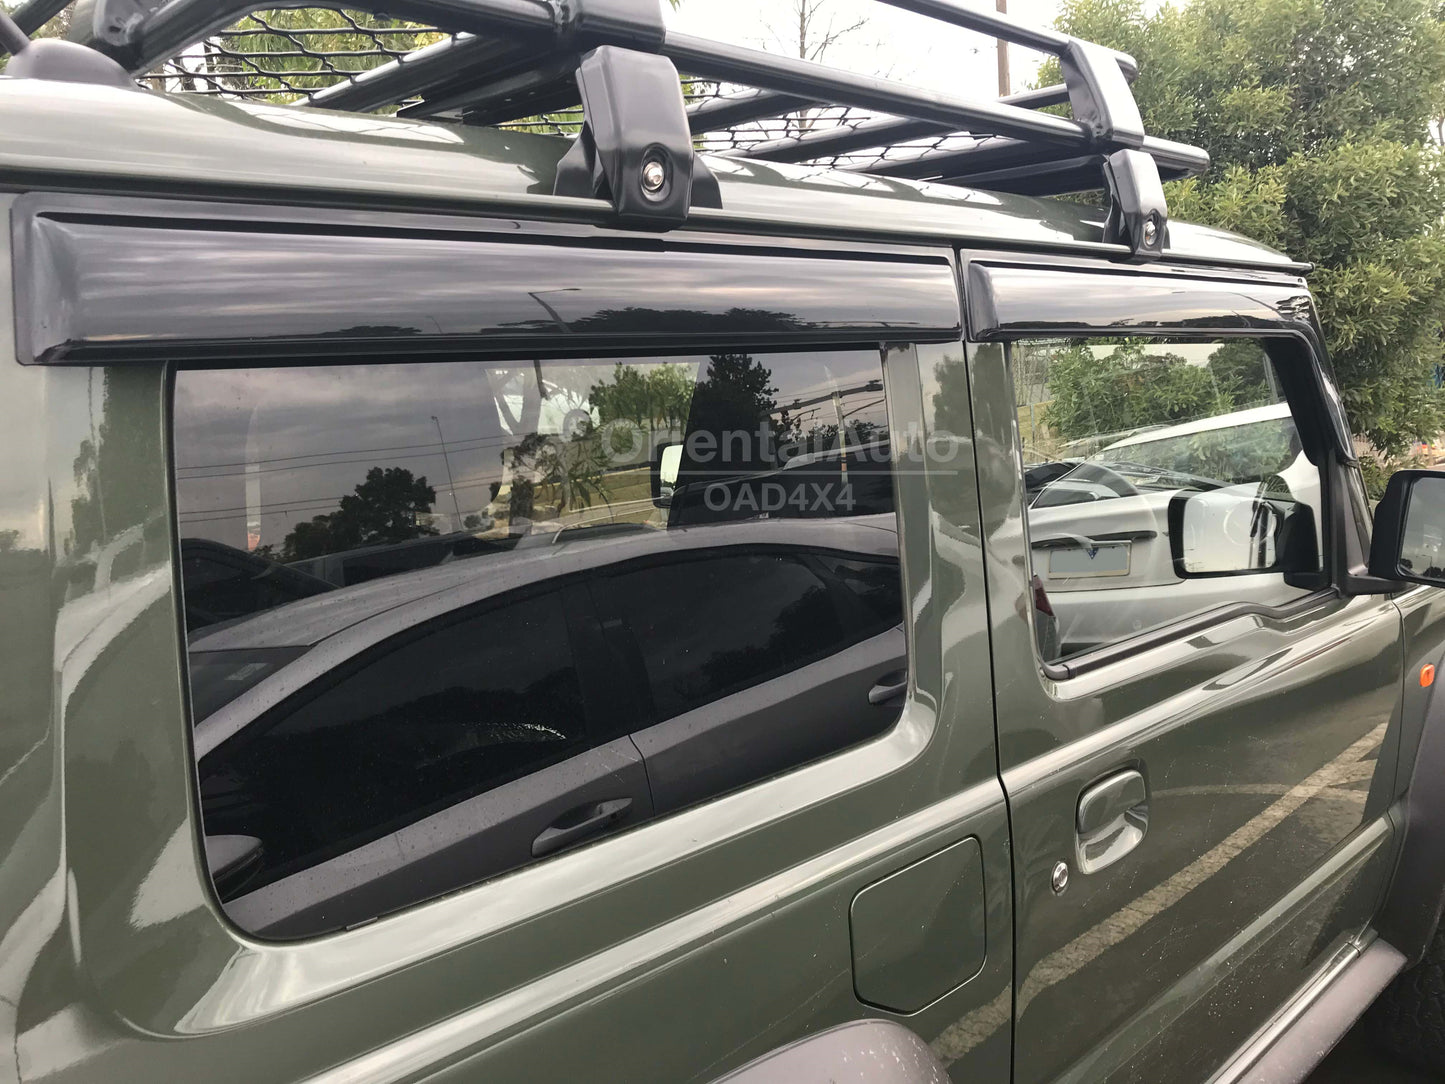 Luxury Weather Shields for Suzuki Jimny 3 Doors 2018+ Weathershields Window Visors